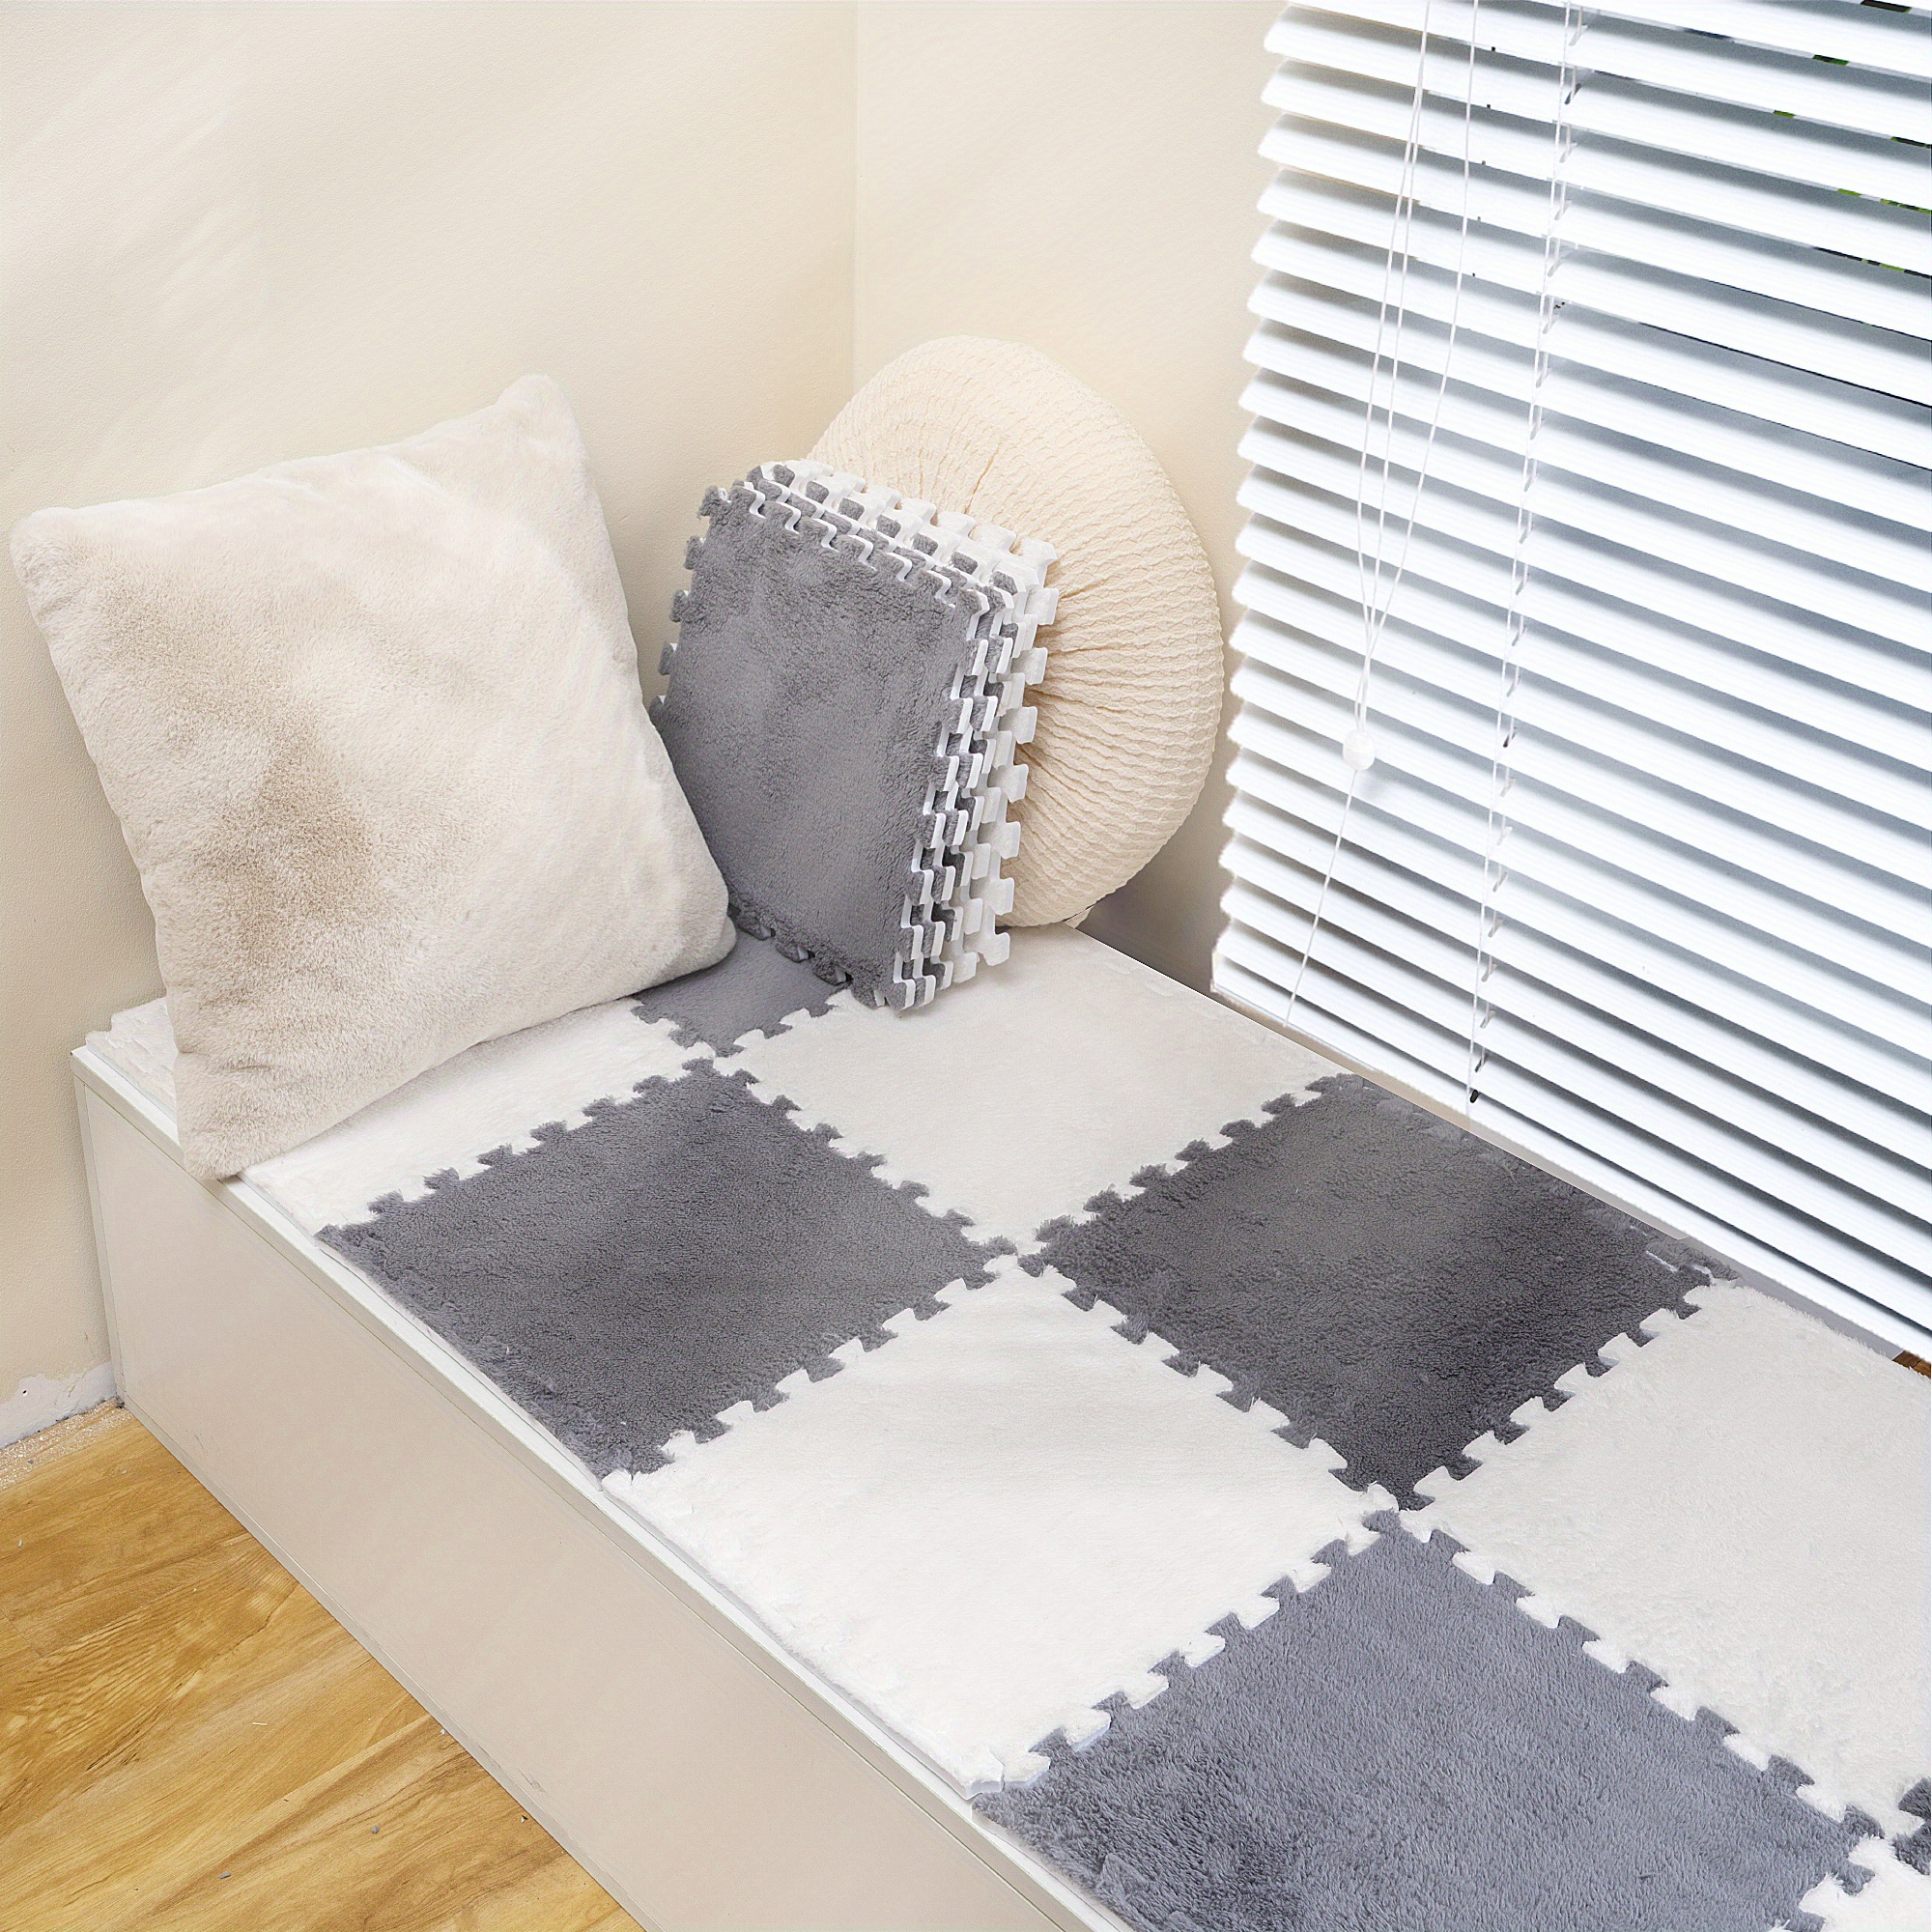 12X12 Plush Interlocking Foam Mat, 6Mm Thick Foam Mat,Living Room Bedroom  Carpet Tiles Area Rug Mat,Soft Puzzle Play Mat,Green+White,20Pcs